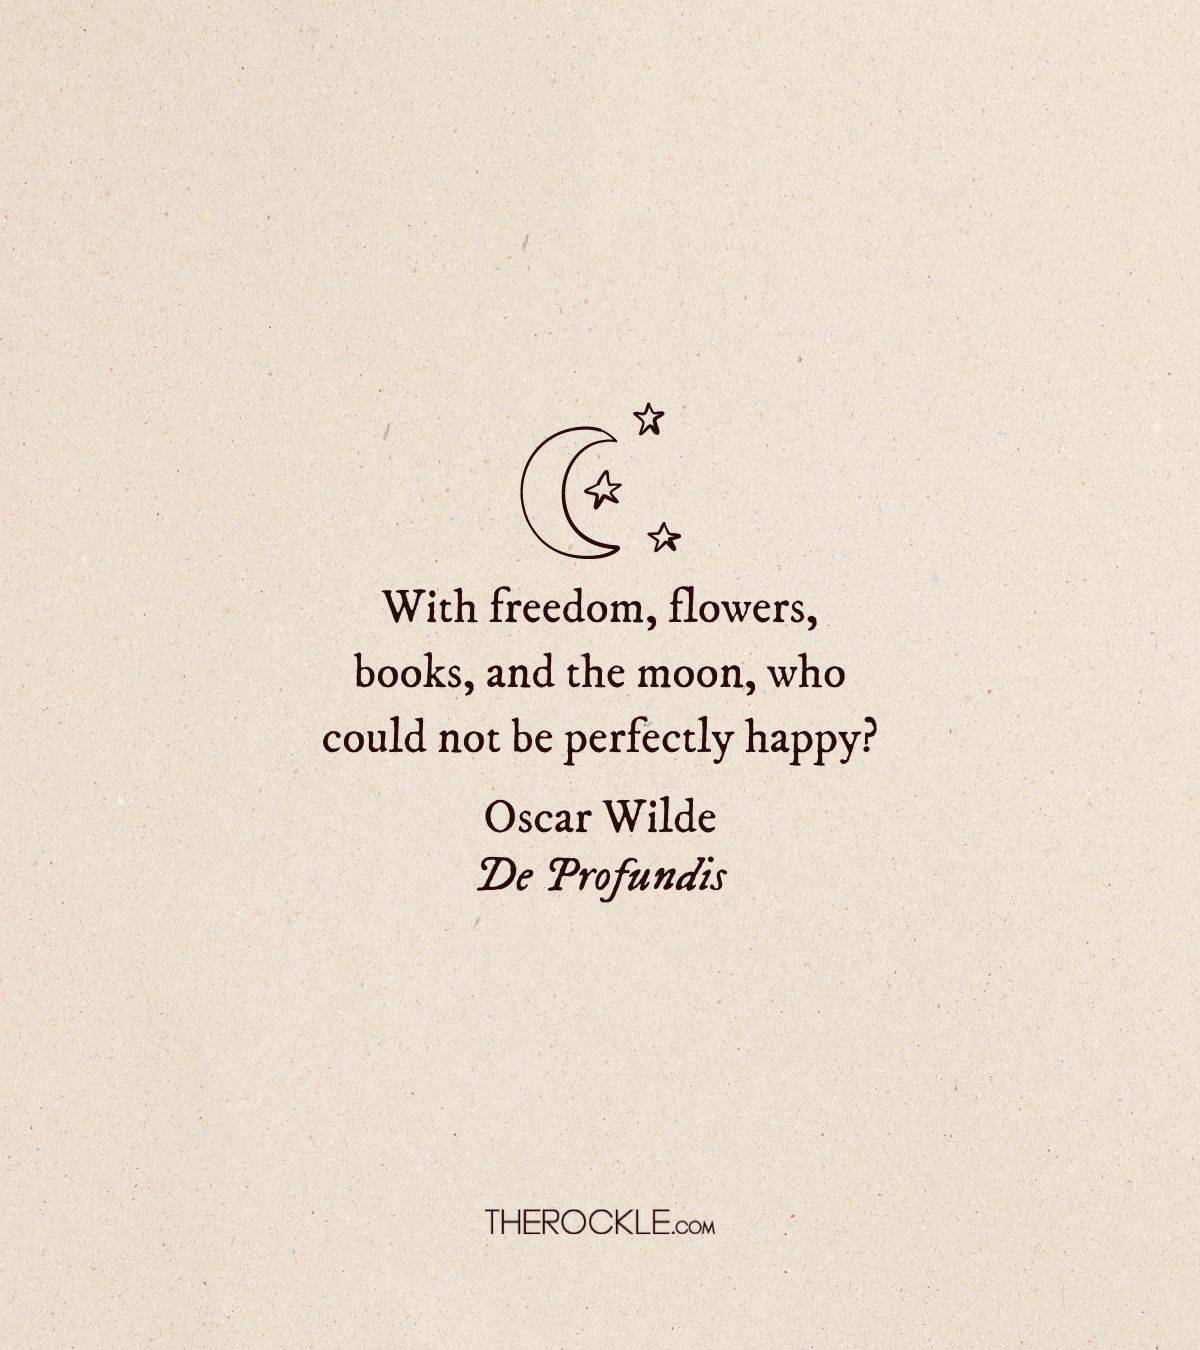 Oscar Wilde on happiness